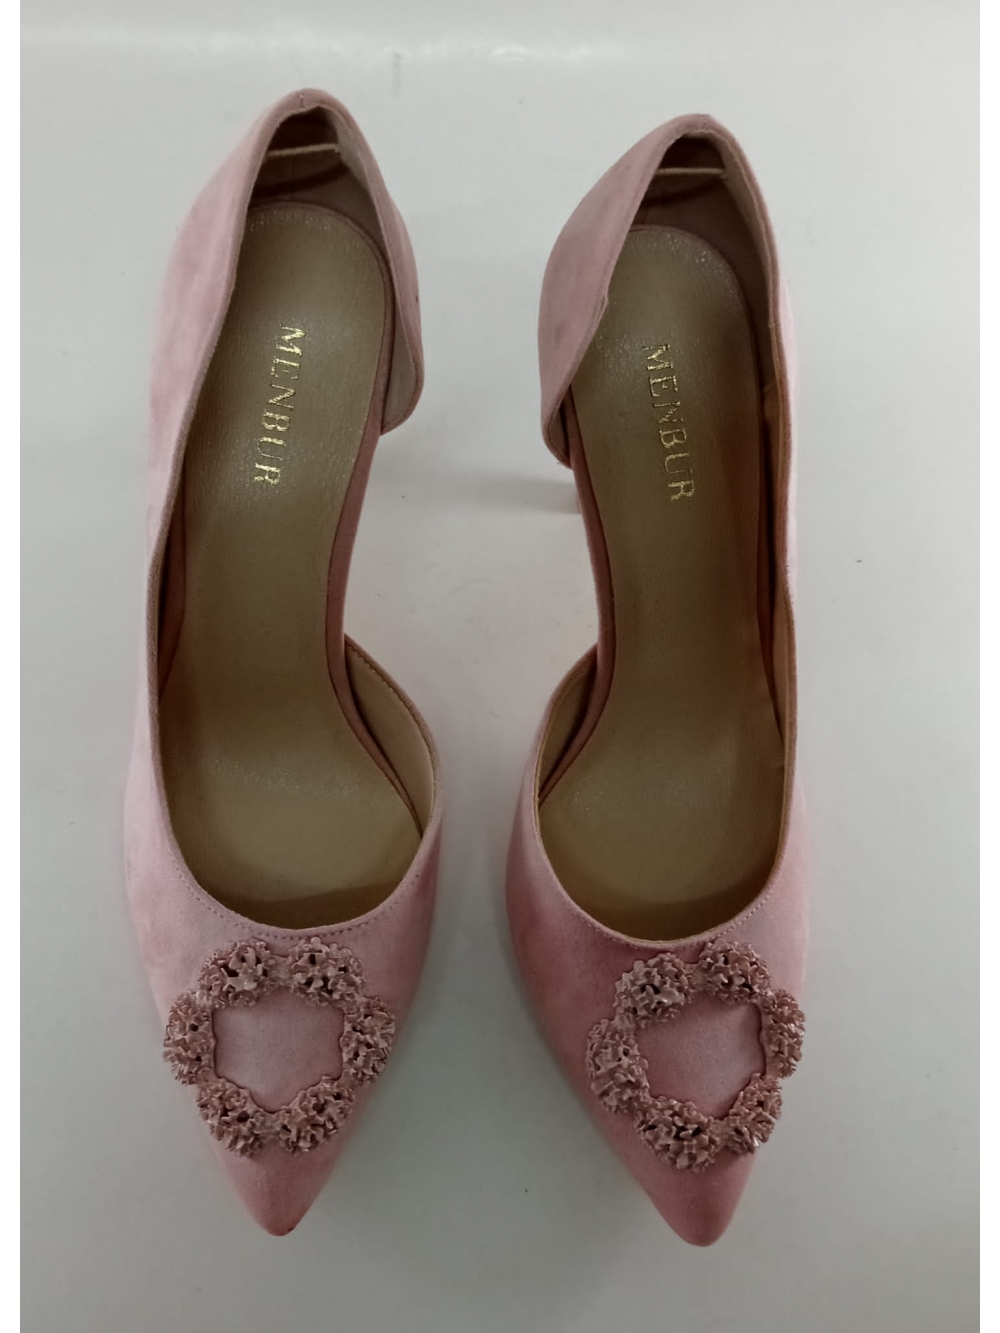 Menbur zapato en ante rosa(nude) - Calzados Grau